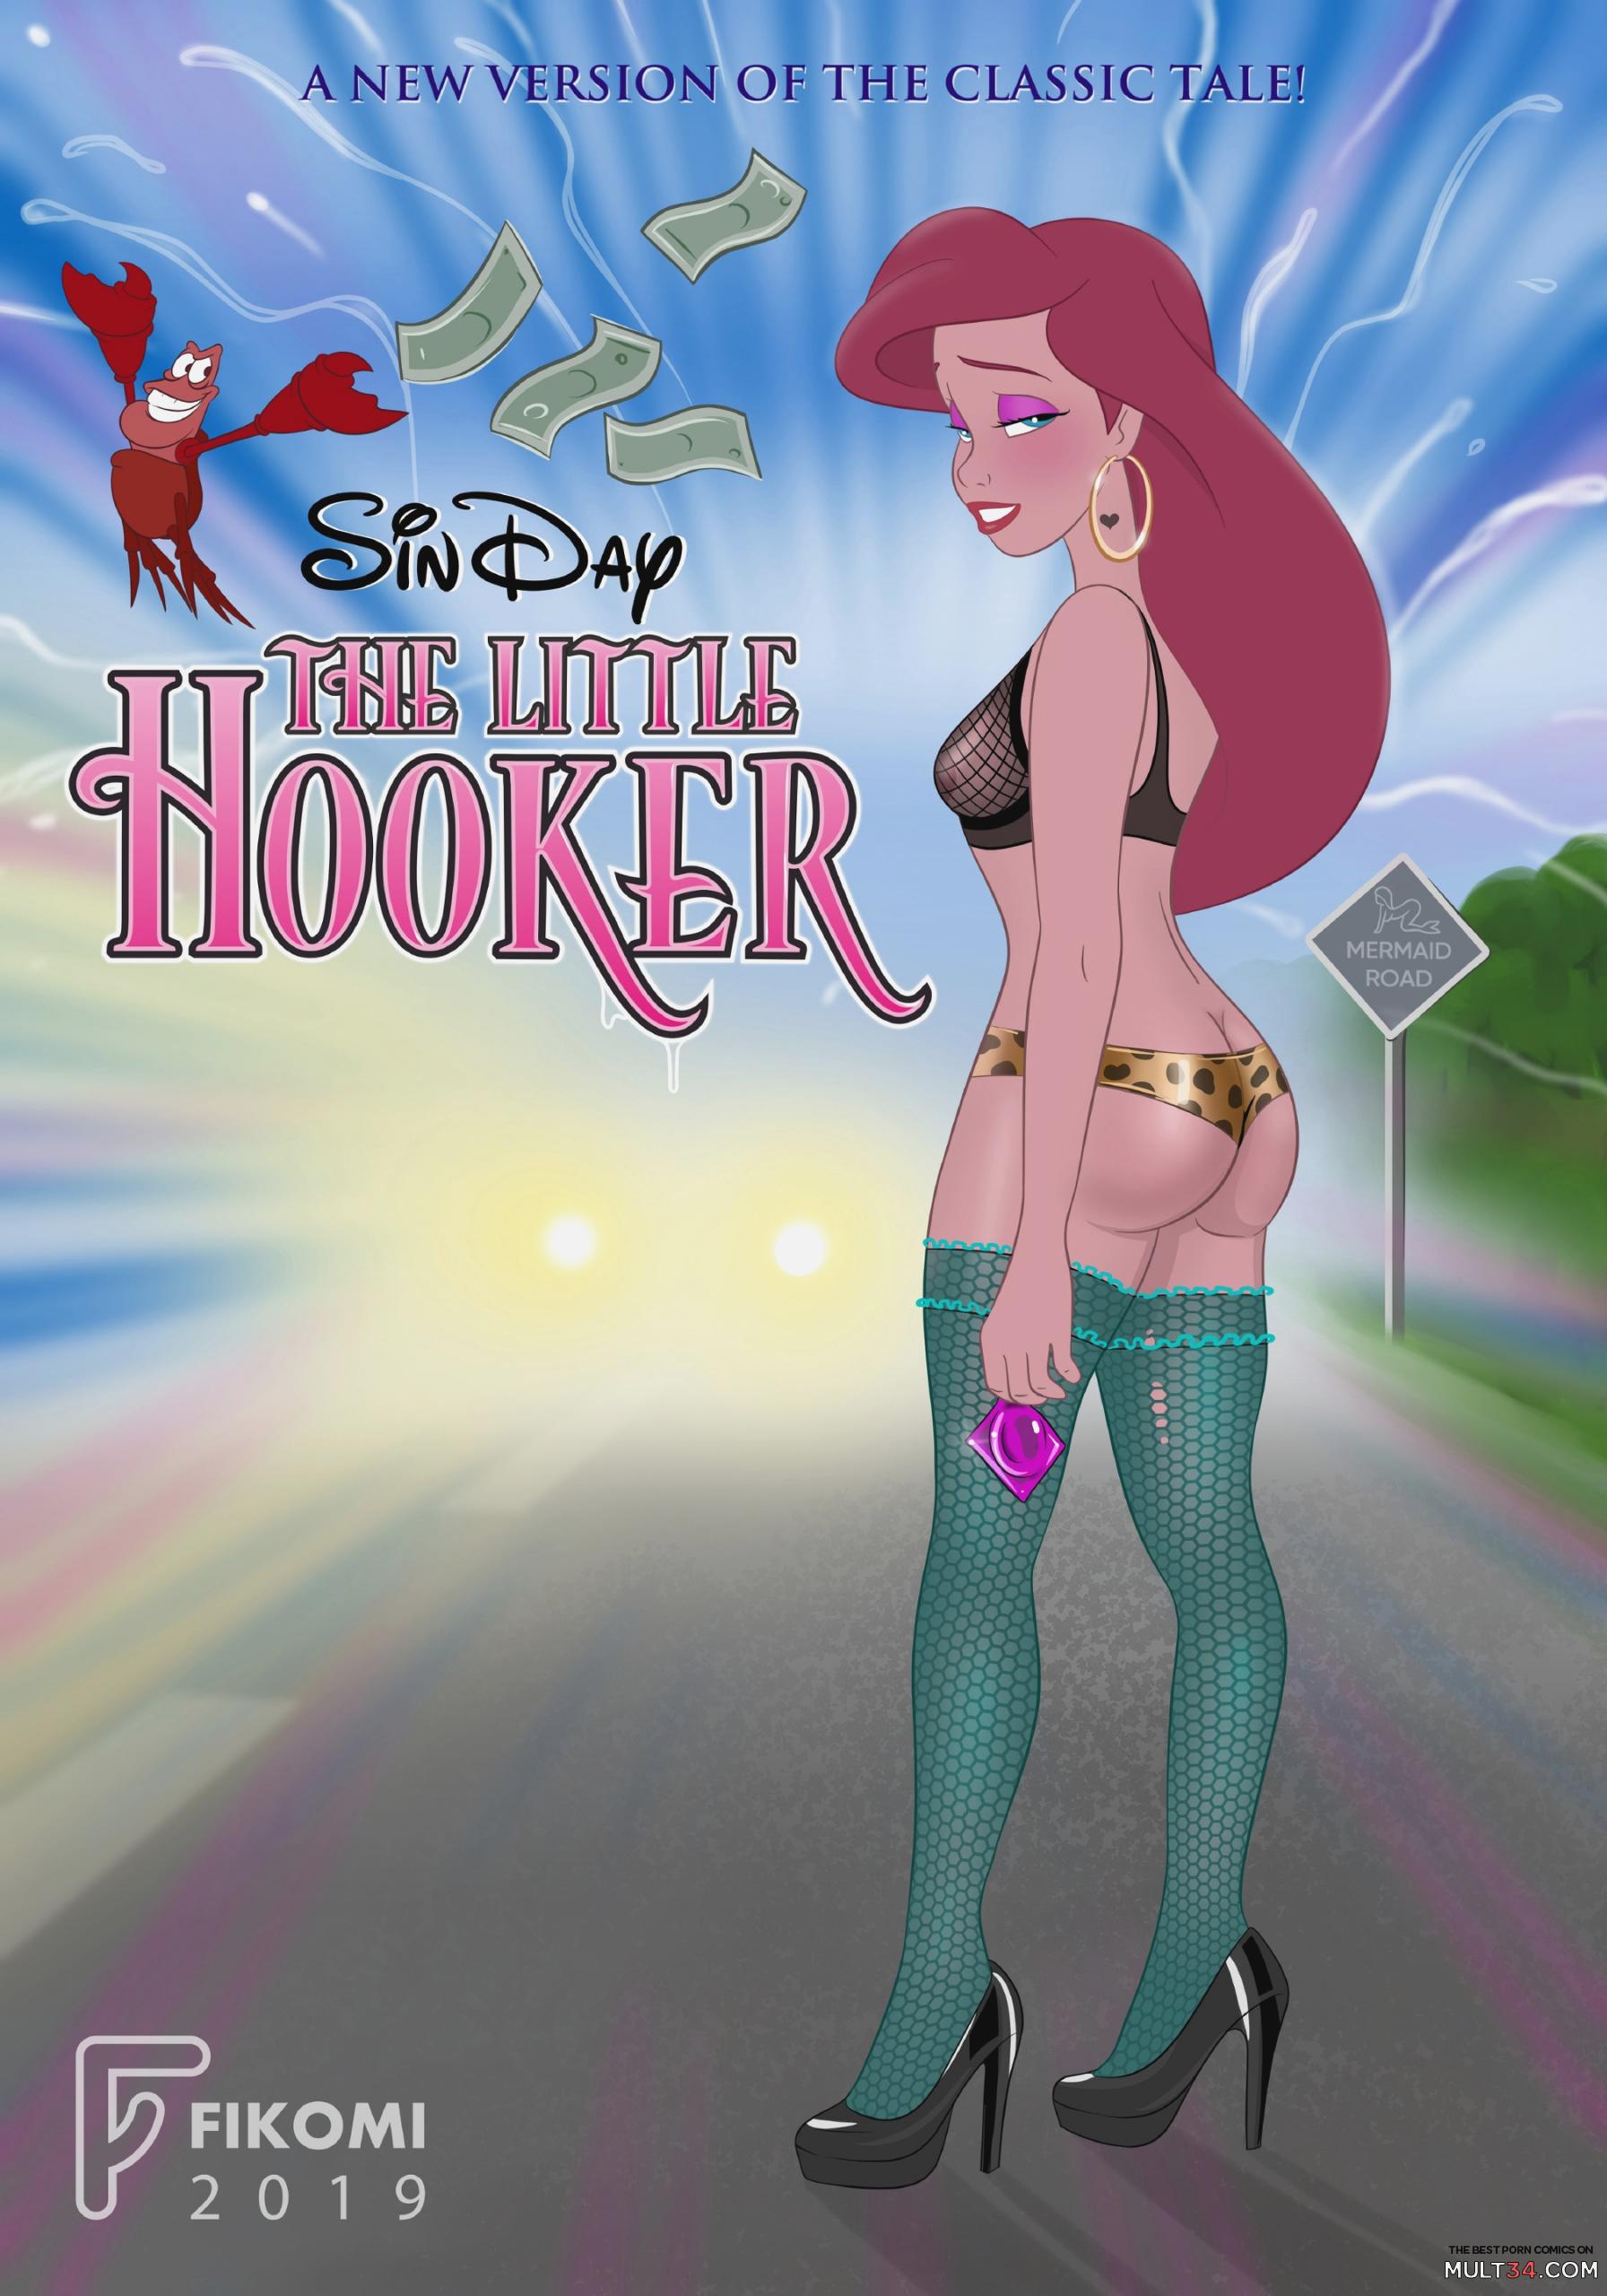 The Little Hooker porn comic - the best cartoon porn comics, Rule 34 |  MULT34